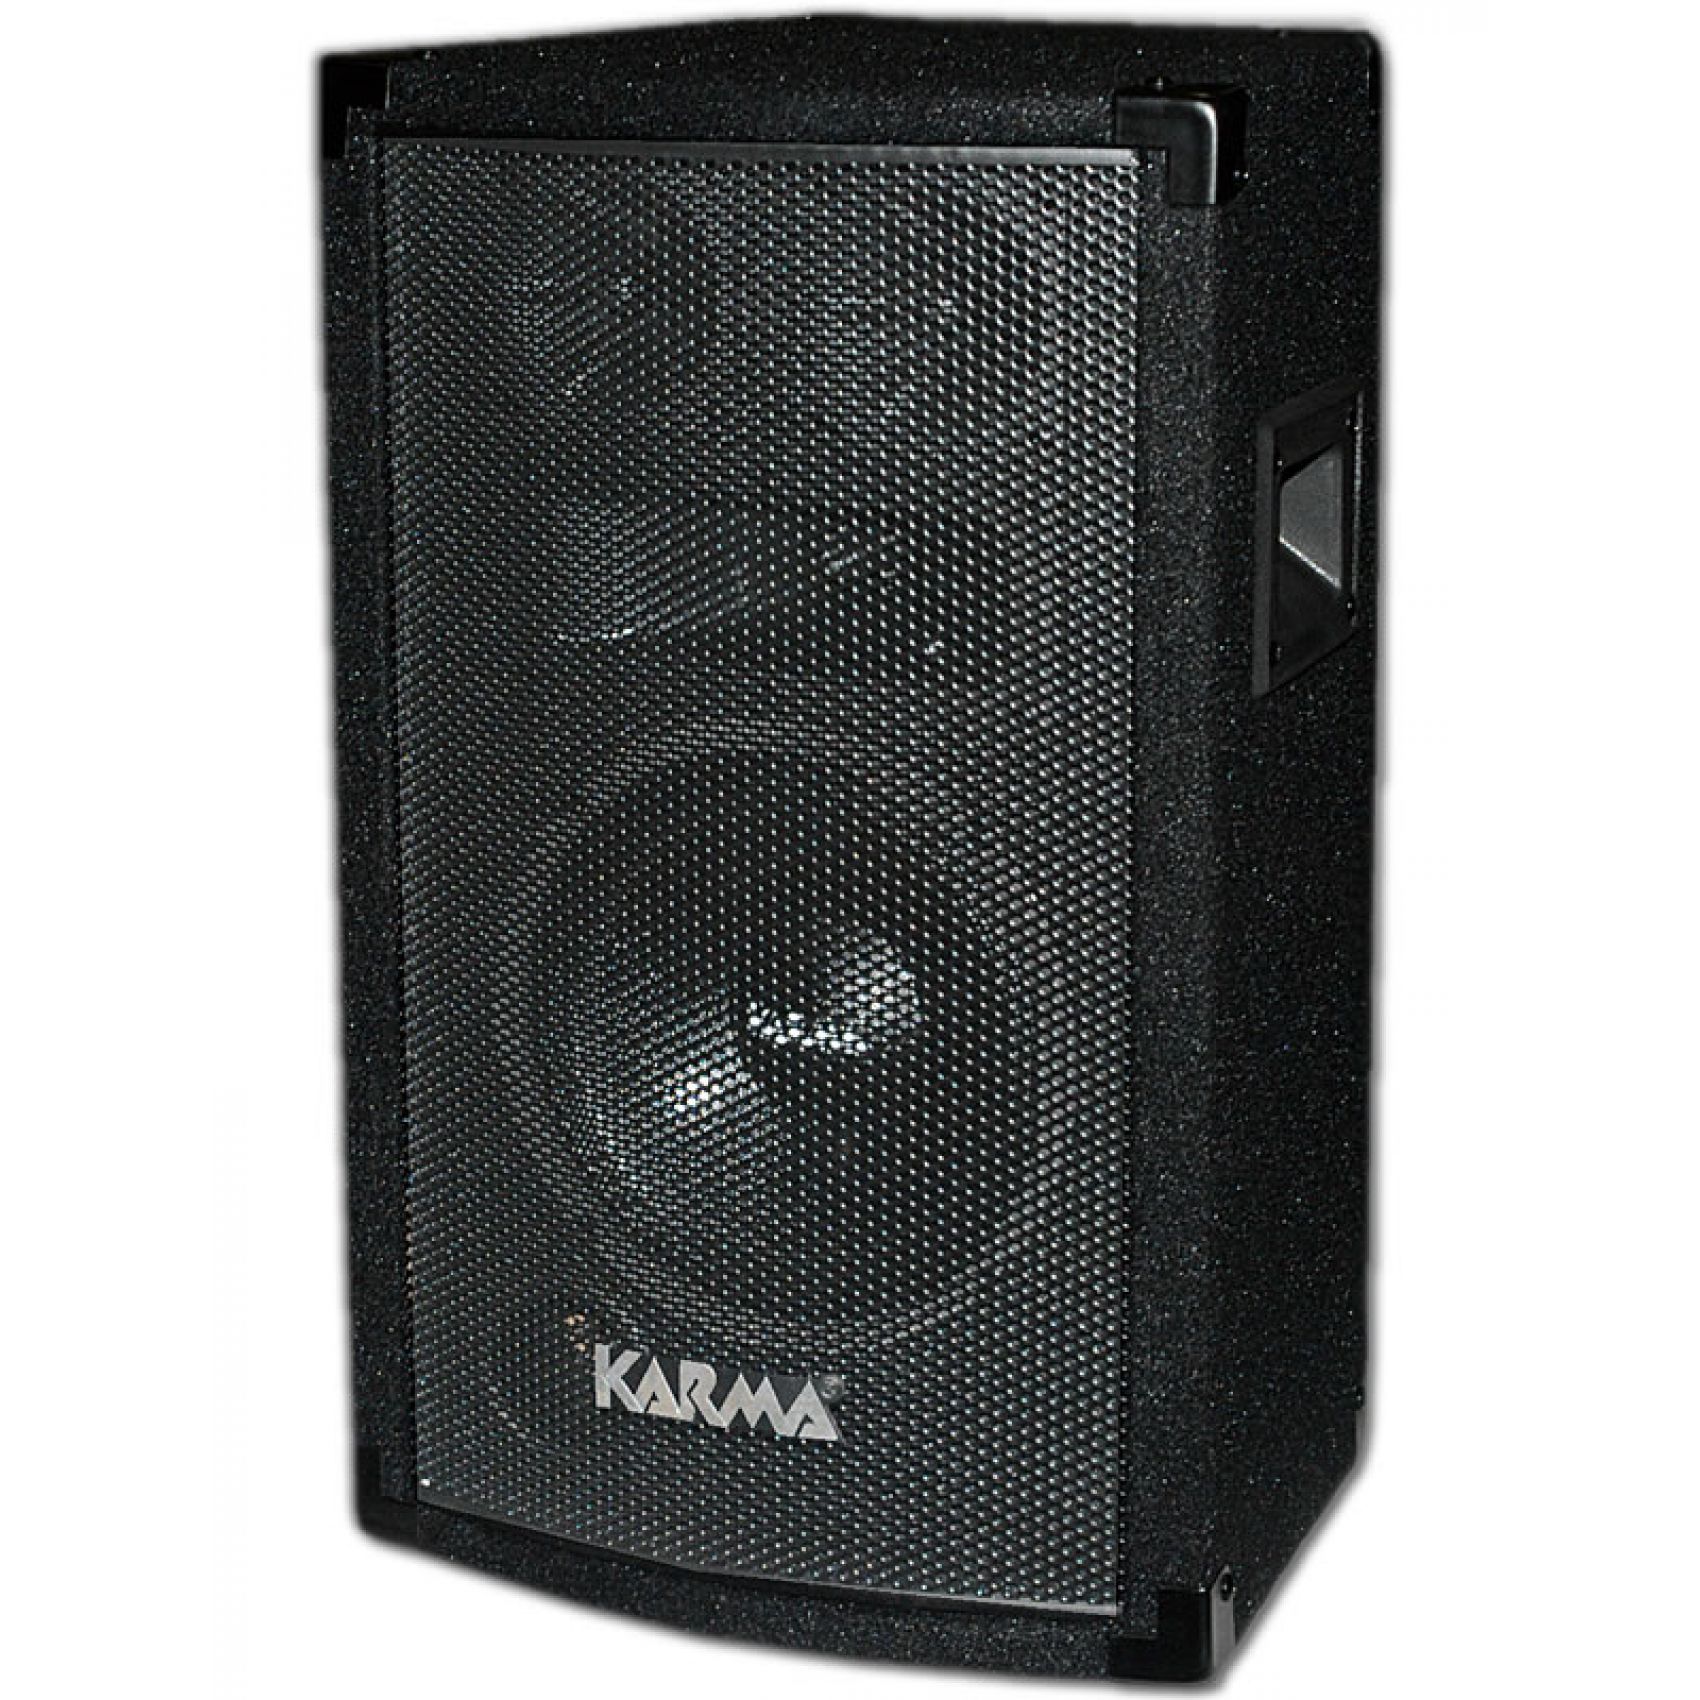 KARMA BX 1208 - BOX PASSIVO PRO 150W